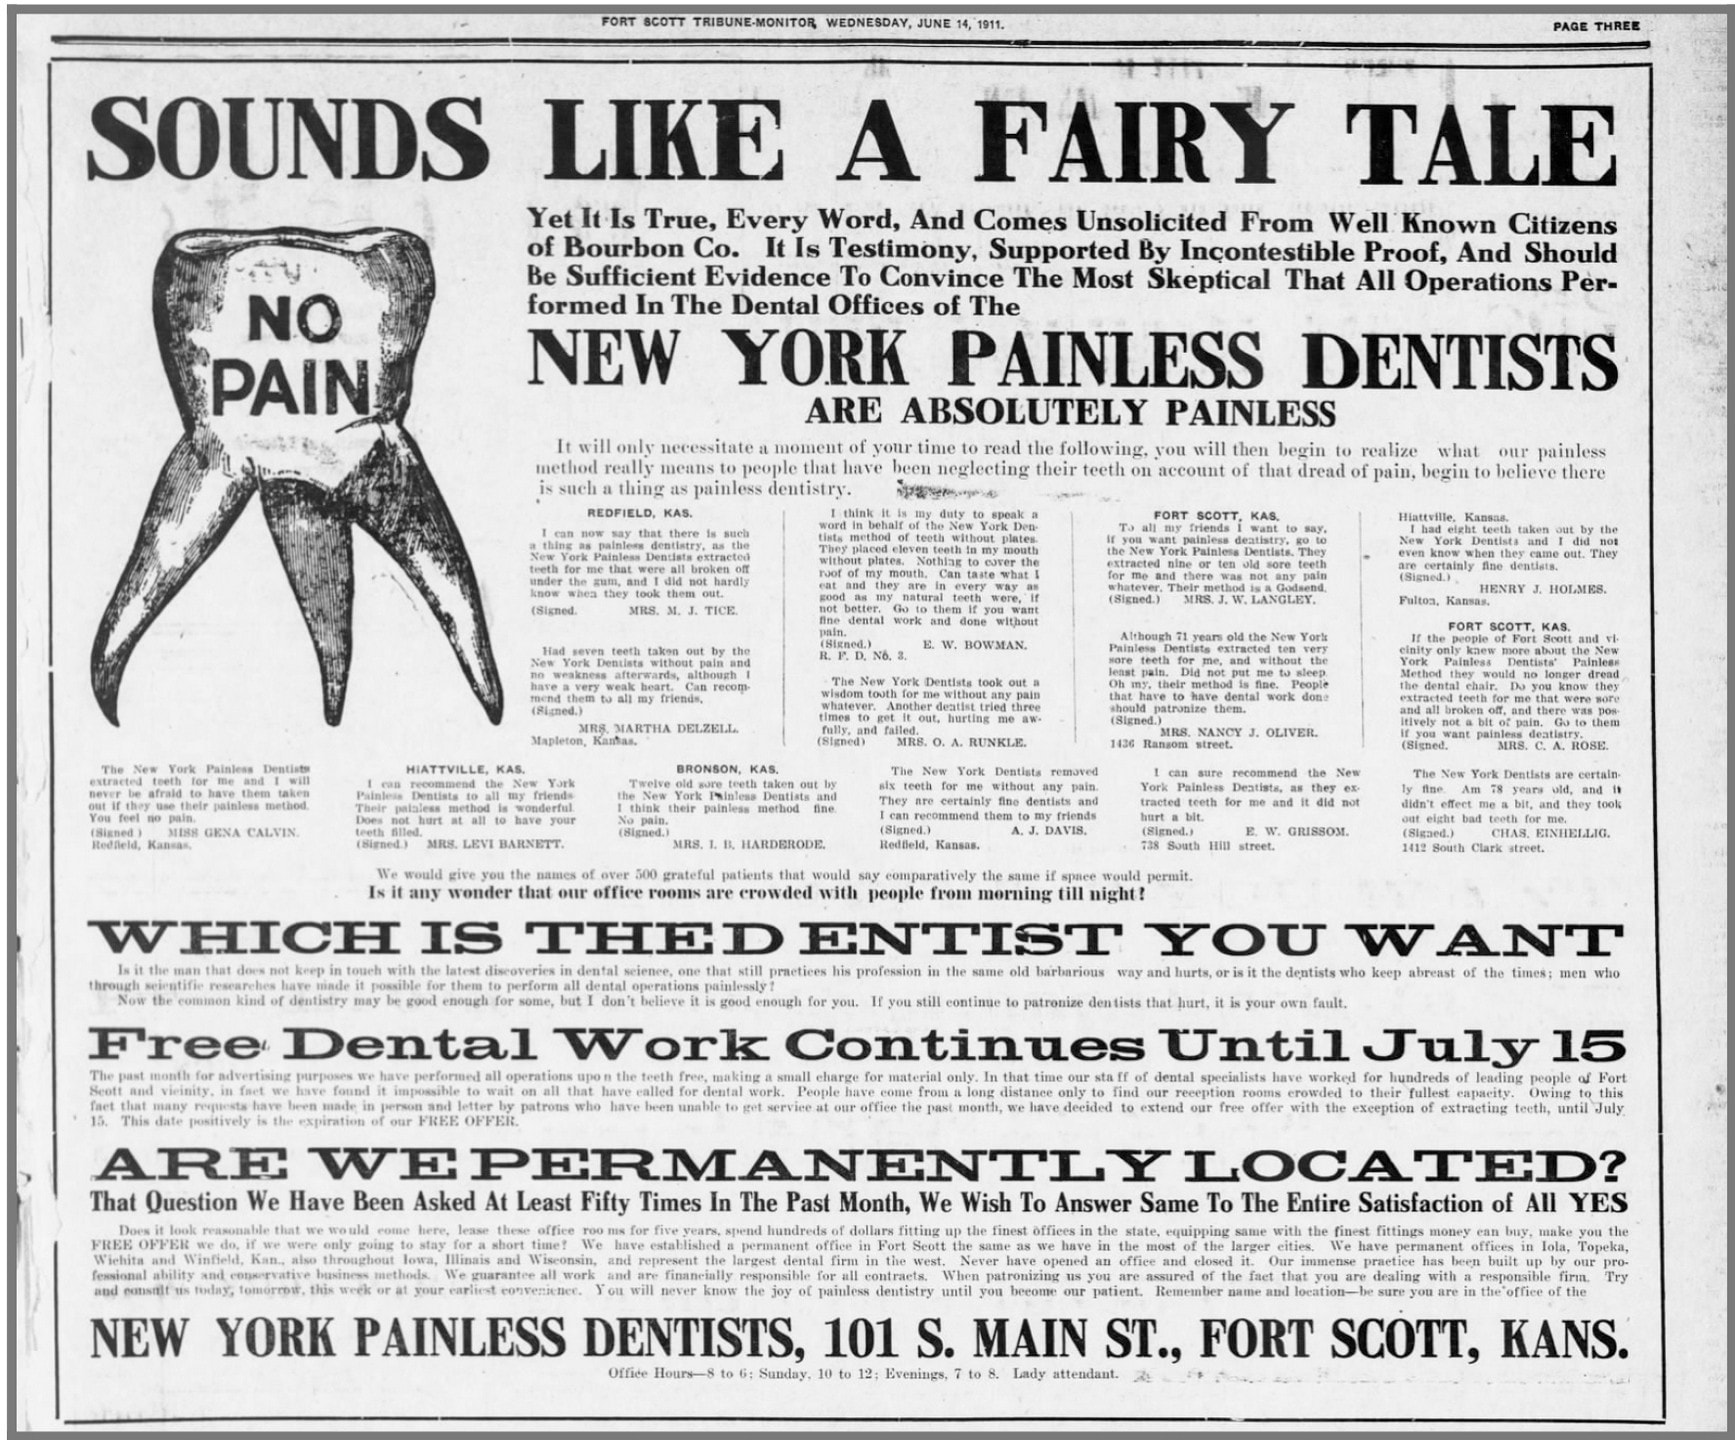 FtScottDailyTribuneKansas6/14/1911 - Newspapers.com